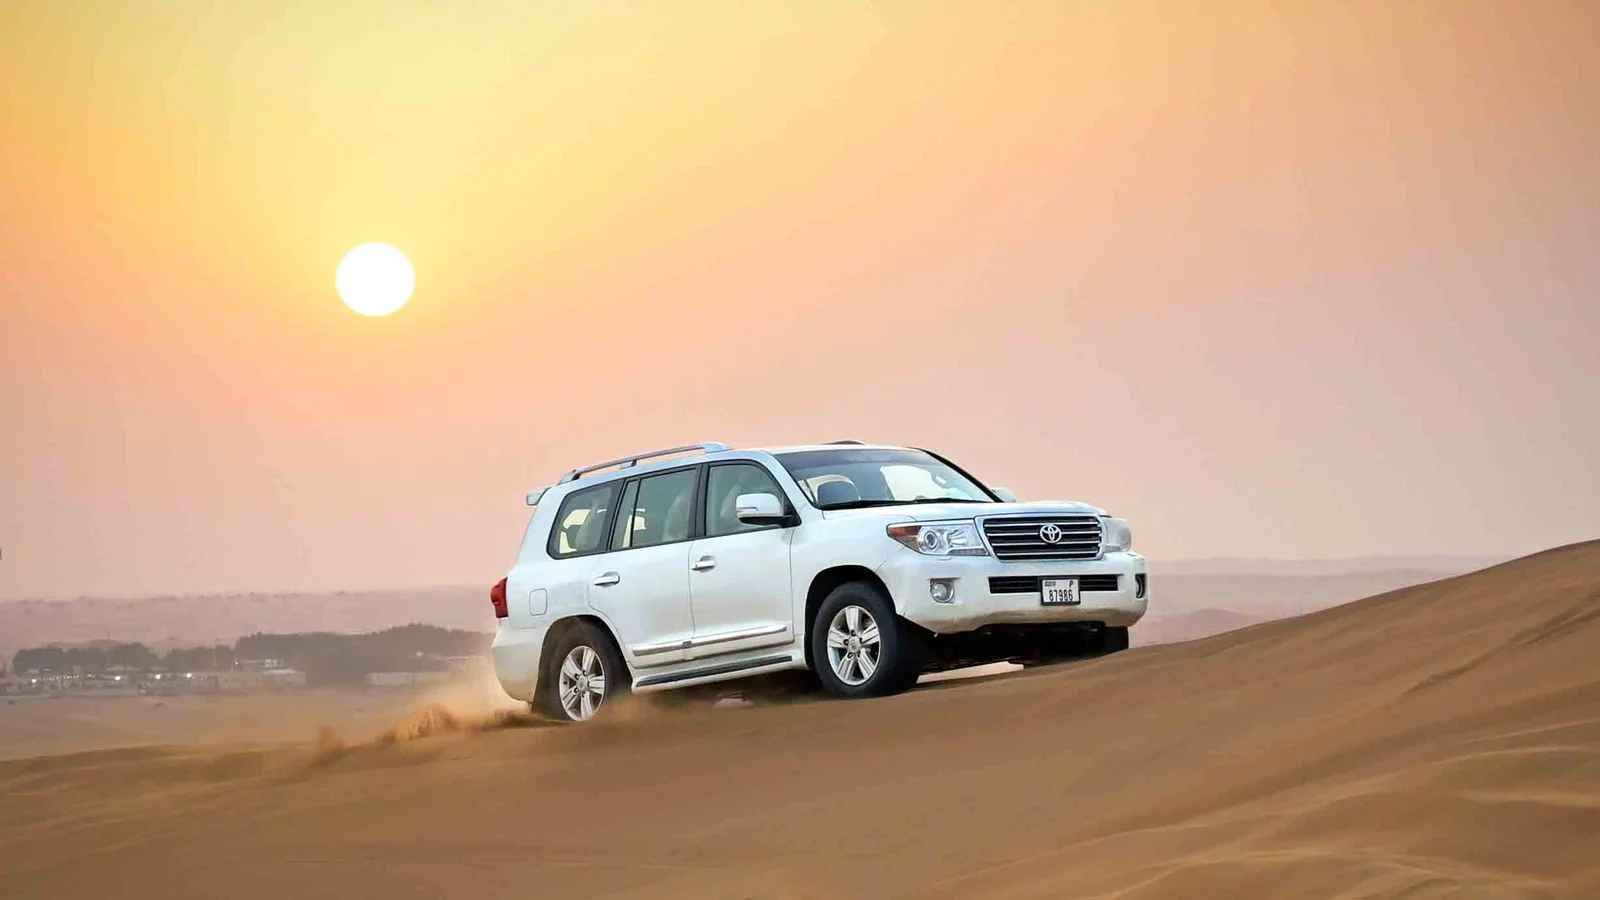 Morning Desert Safari Tour with Private Car in Dubai